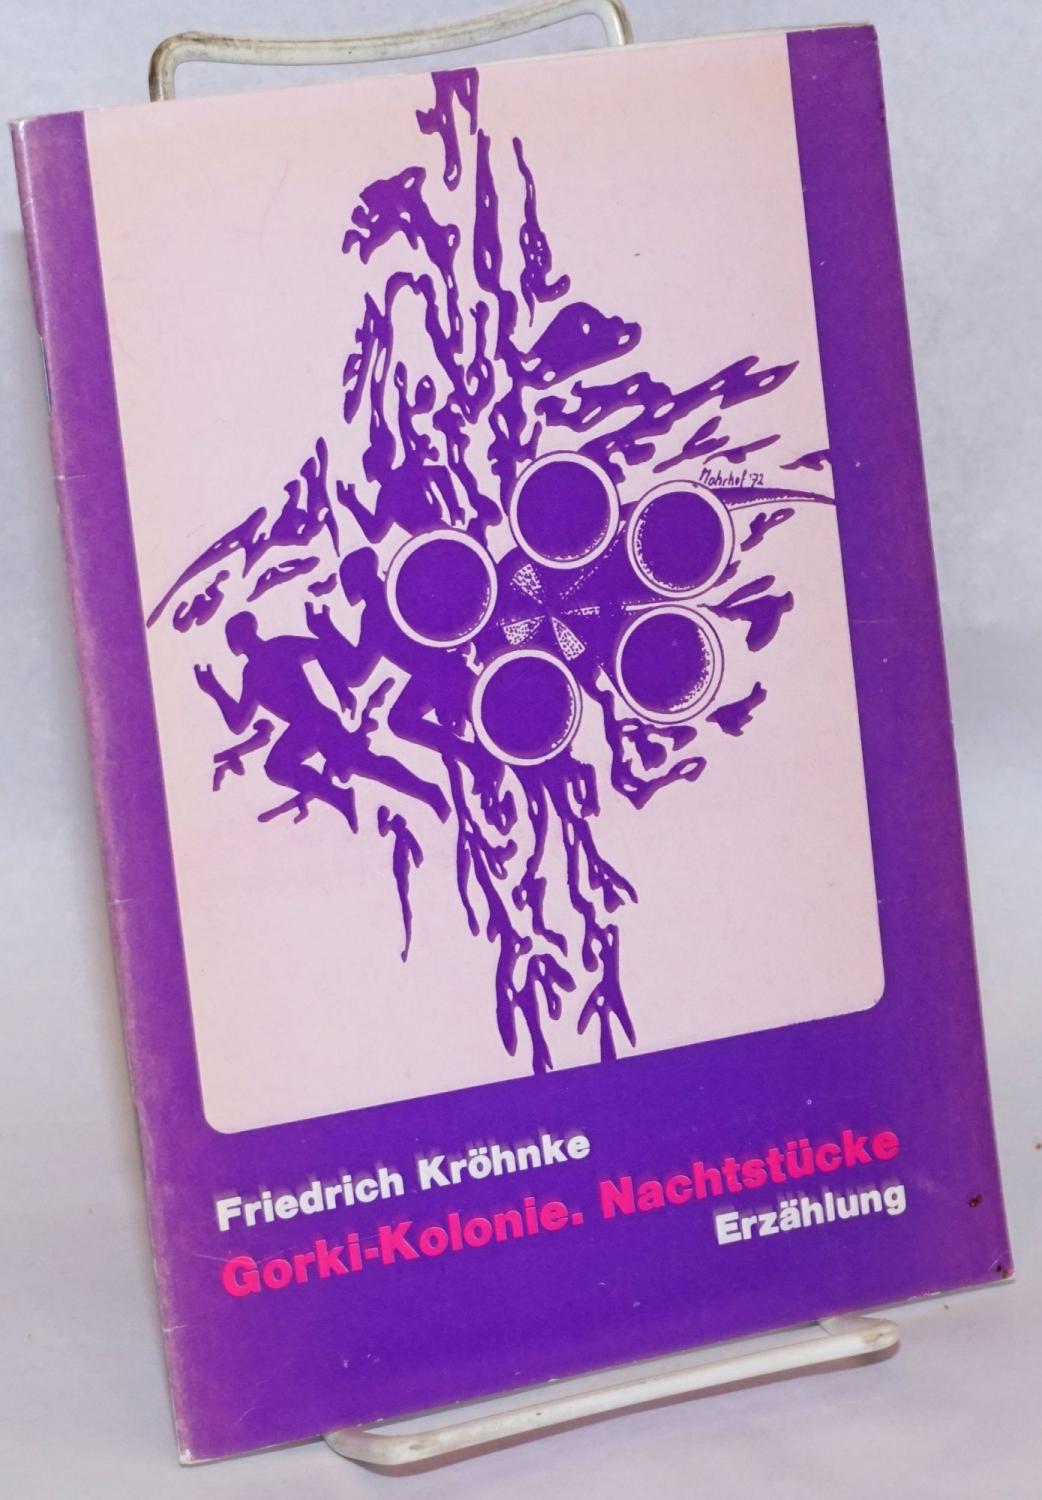 Gorki-Kolonie: Nachtstücke, Erzählung [pamphlet] - Krohnke, Friedrich